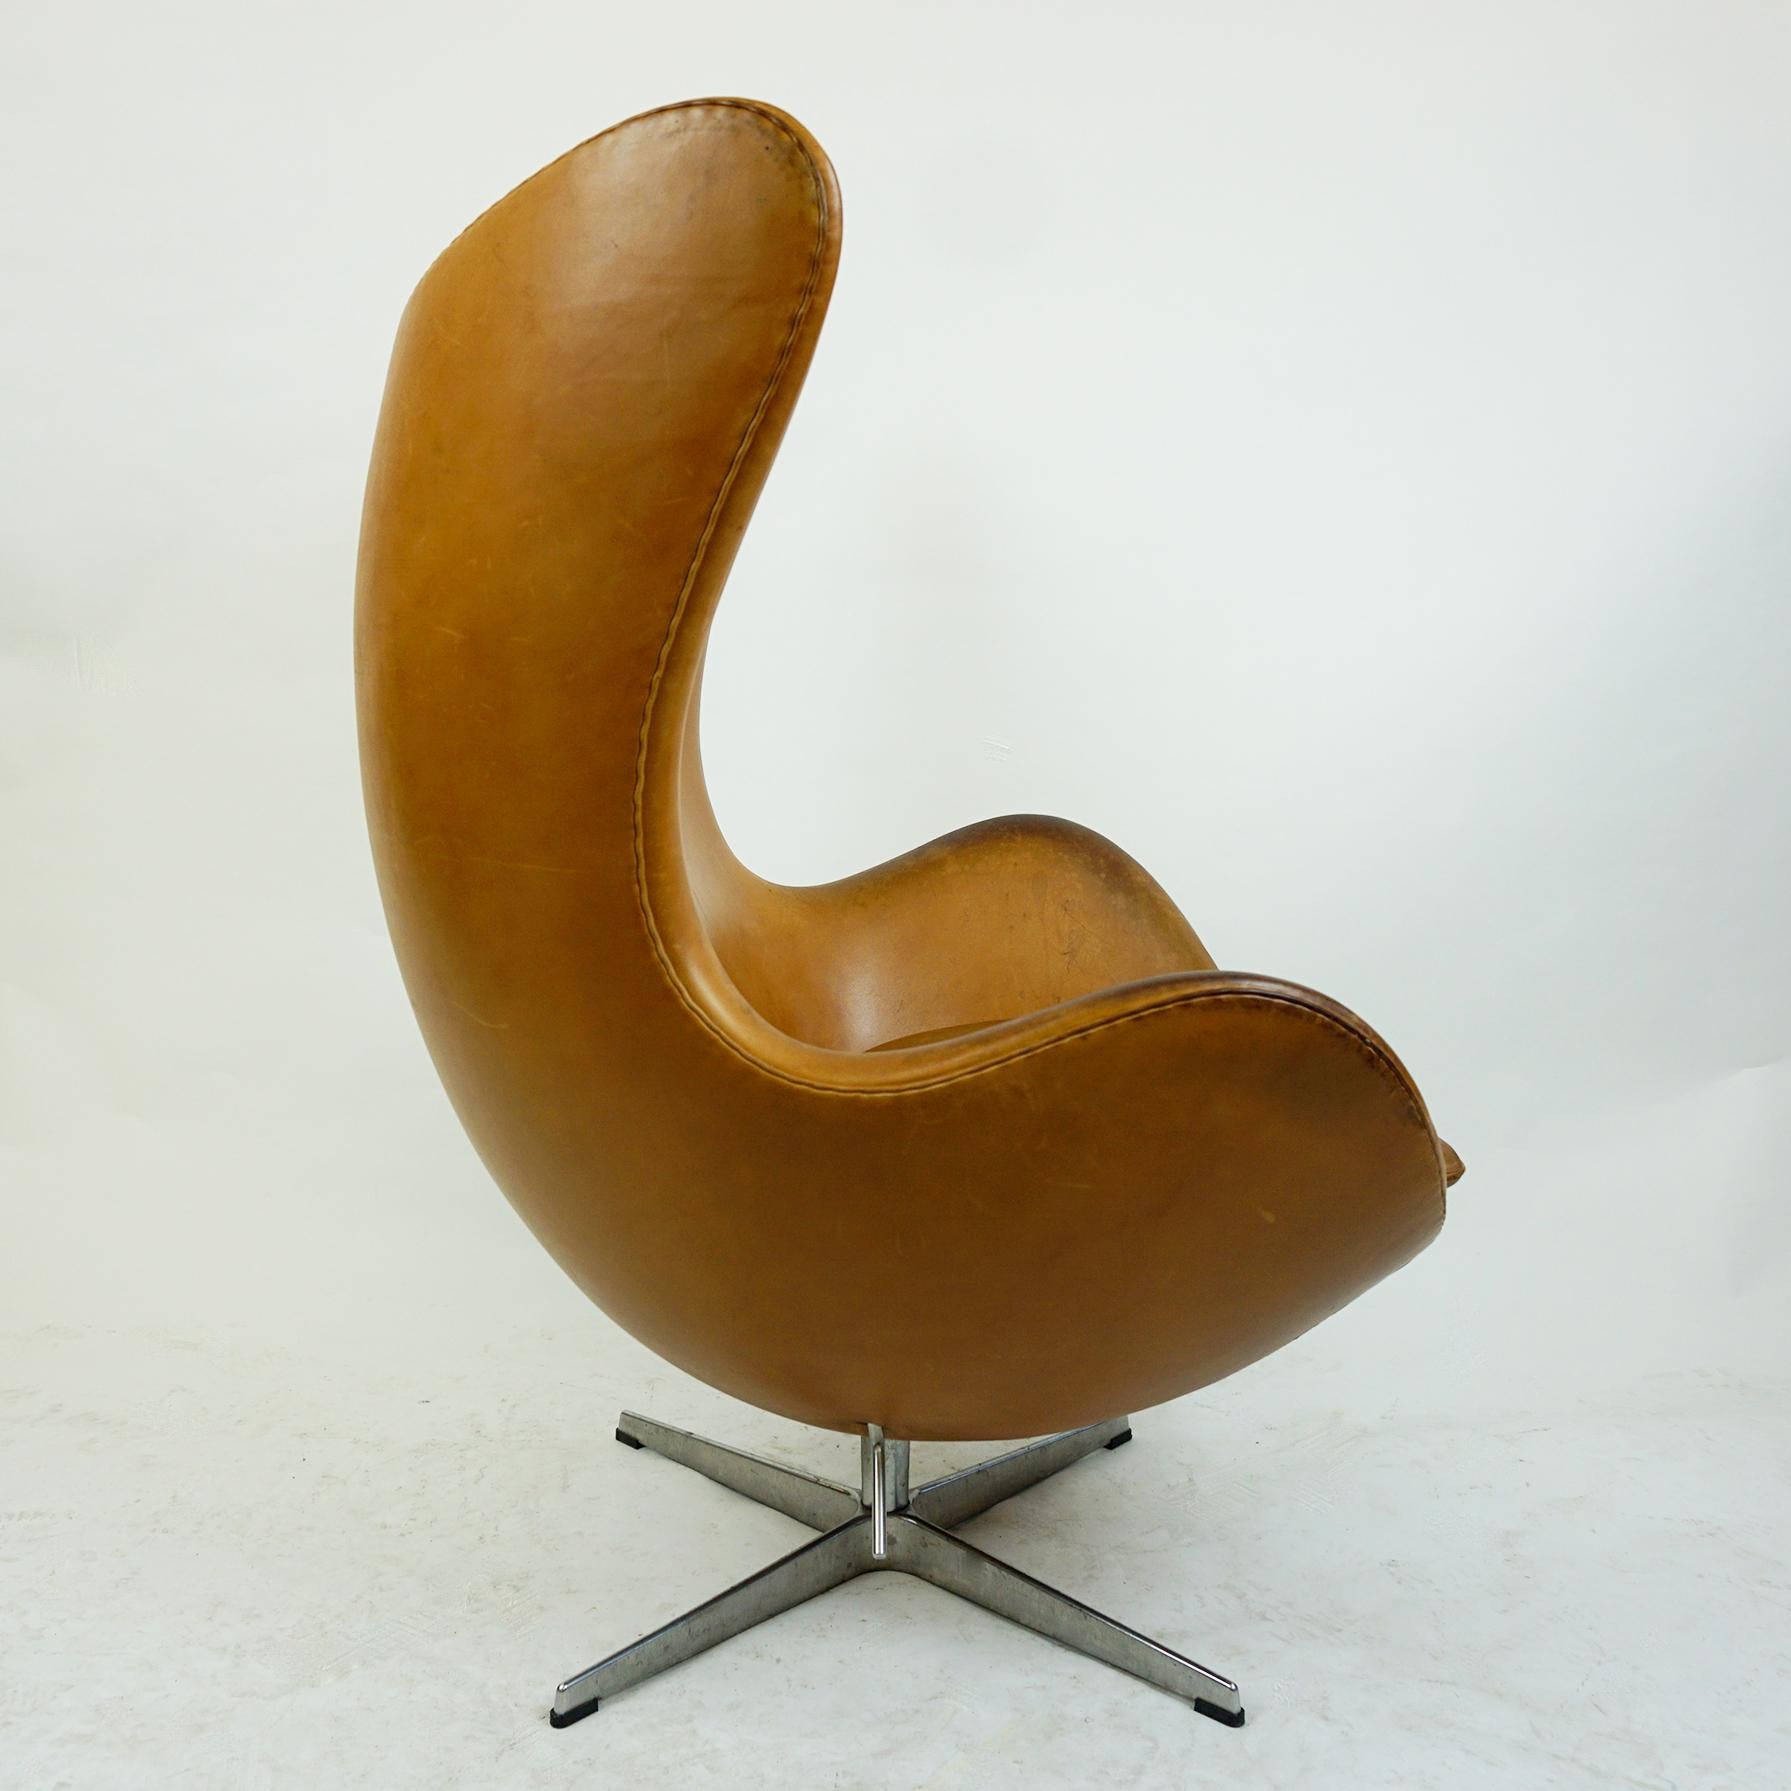 scandinavian egg chair -china -b2b -forum -blog -wikipedia -.cn -.gov -alibaba